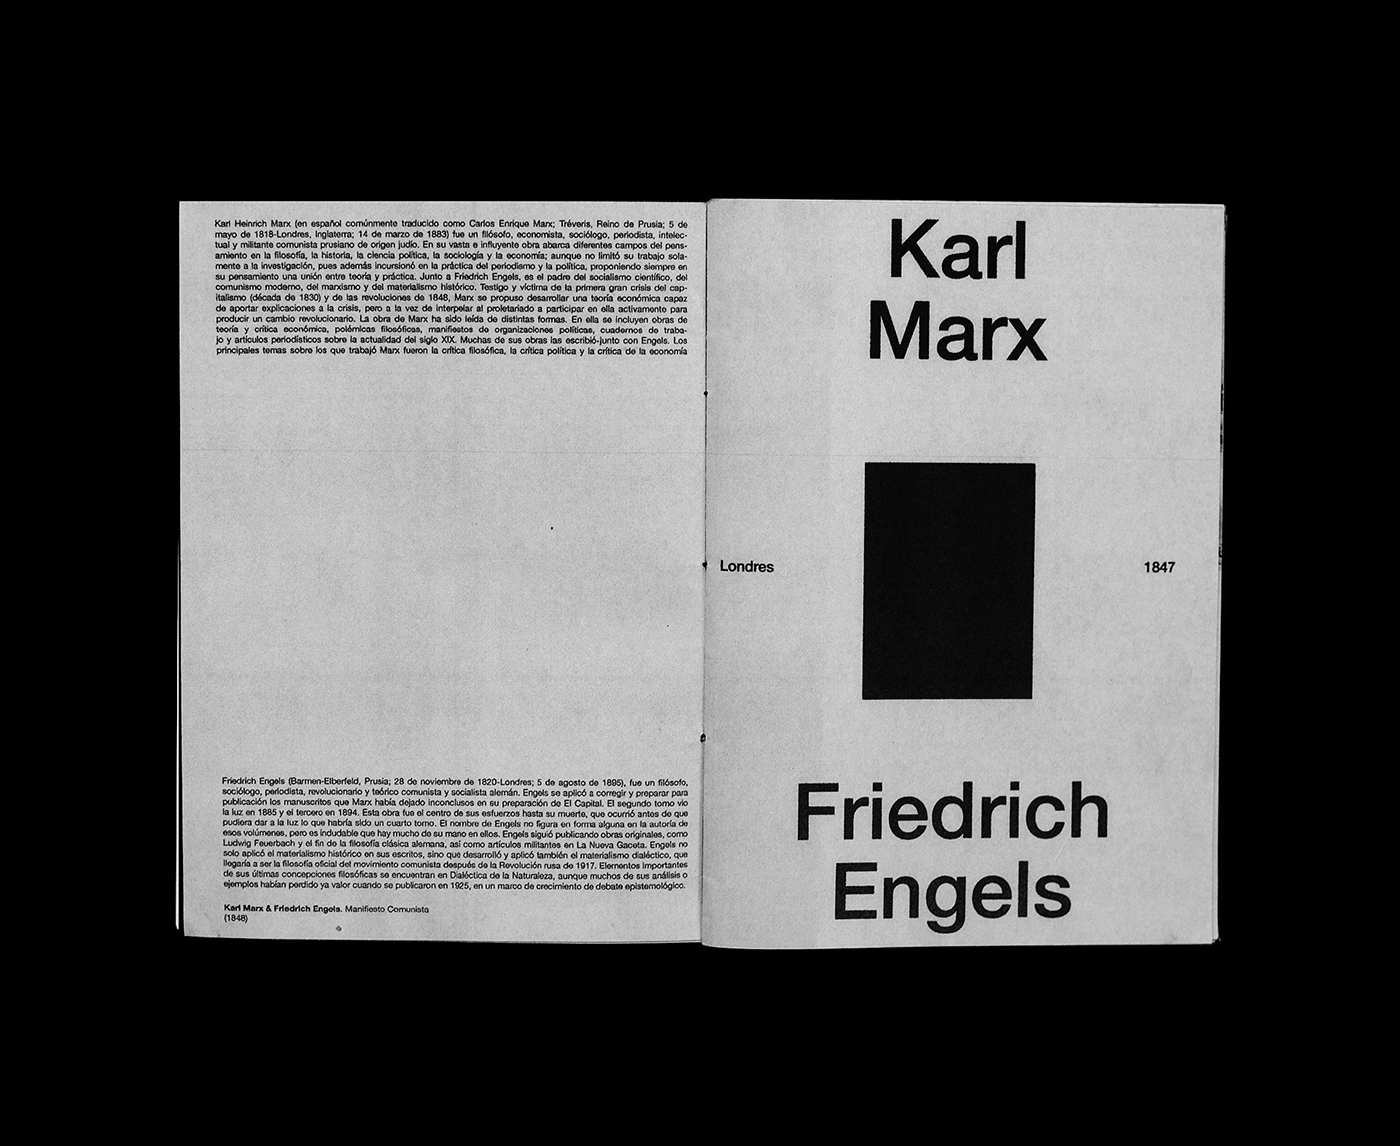 editorial grid typography   fanzine uba Gabriele Fade manifiesto comunista